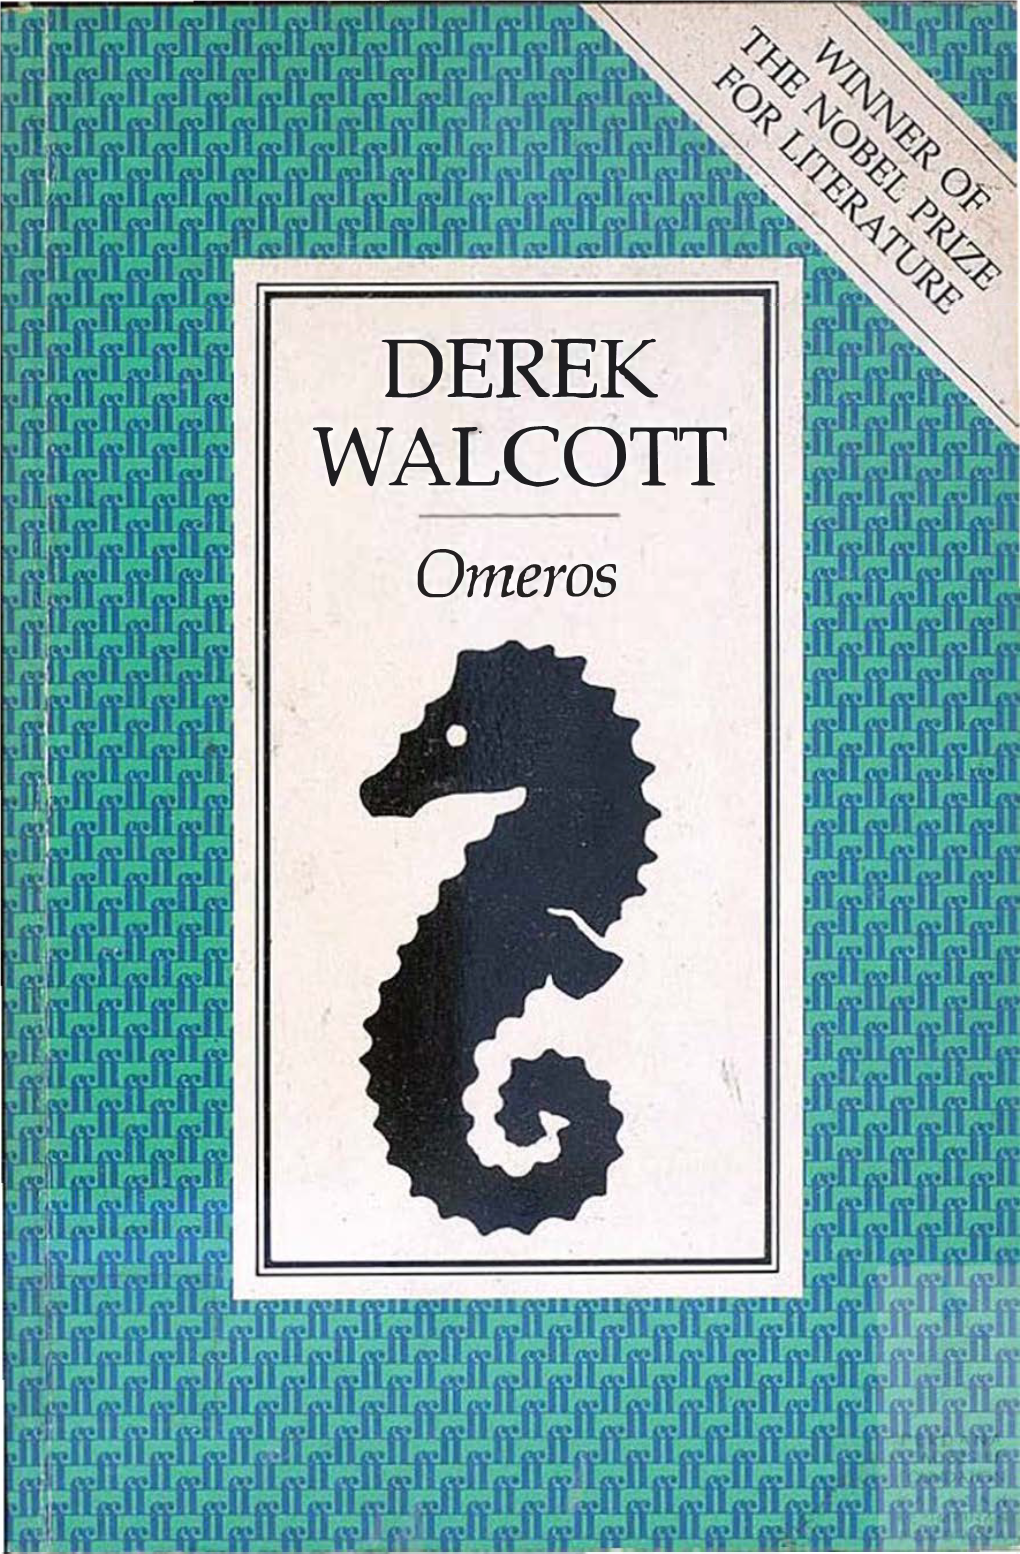 Walcott, D. (1990). Omeros. New York: Farrar Straus Giroux